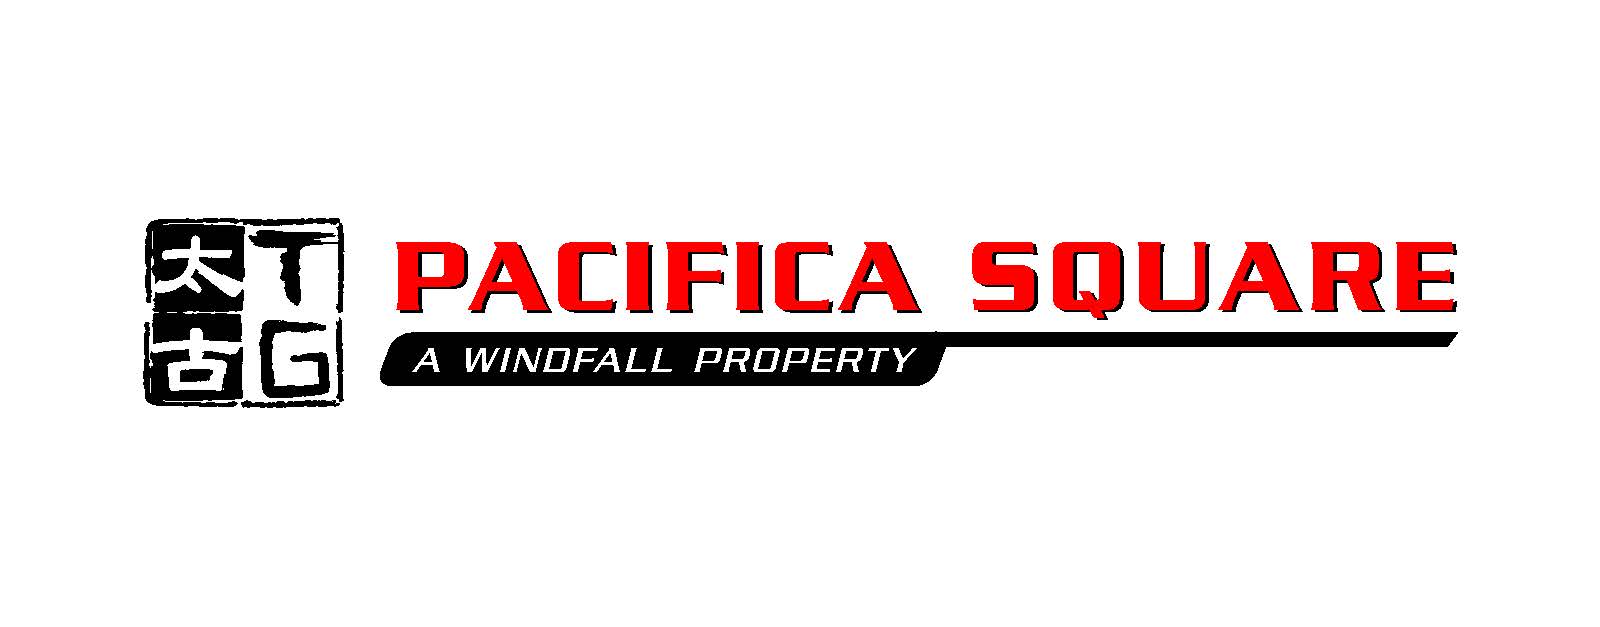 Directory - Pacifica Square